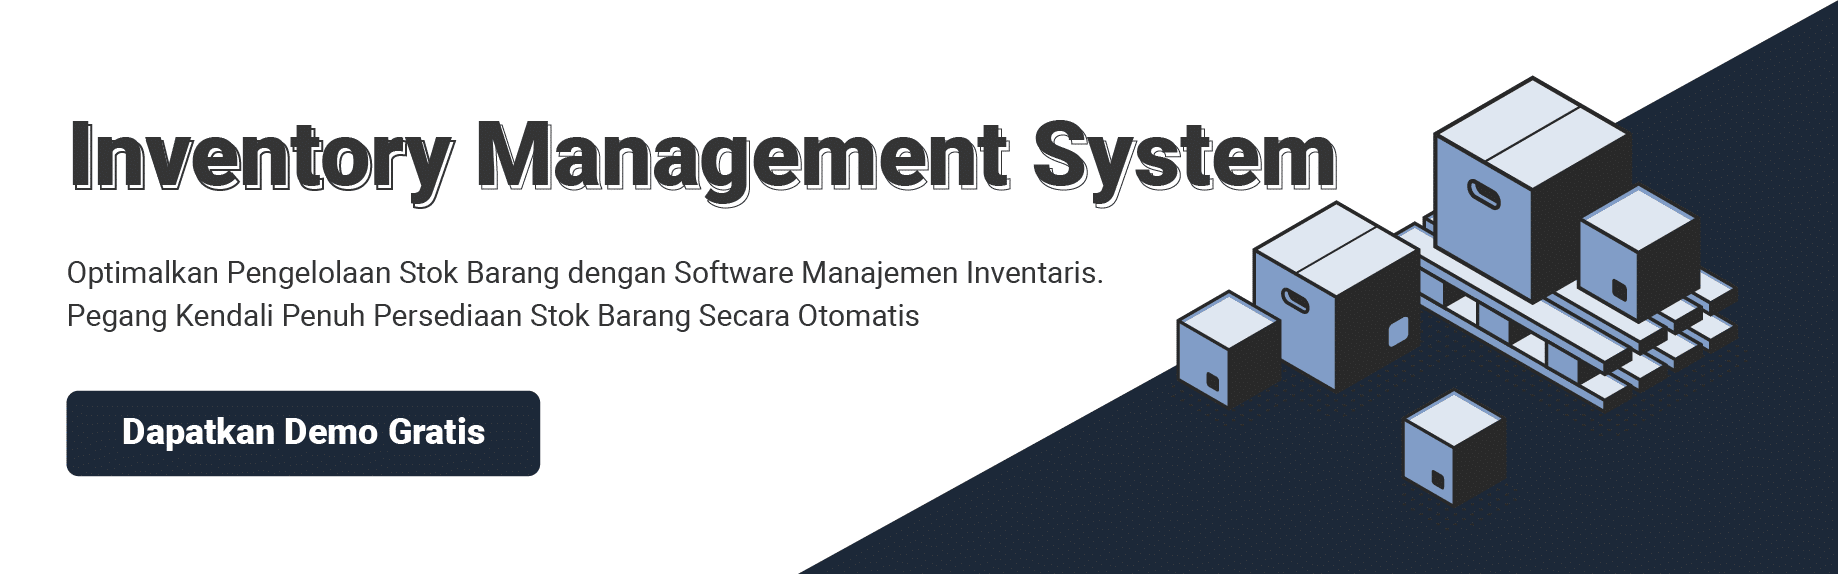 sistem manajemen inventory